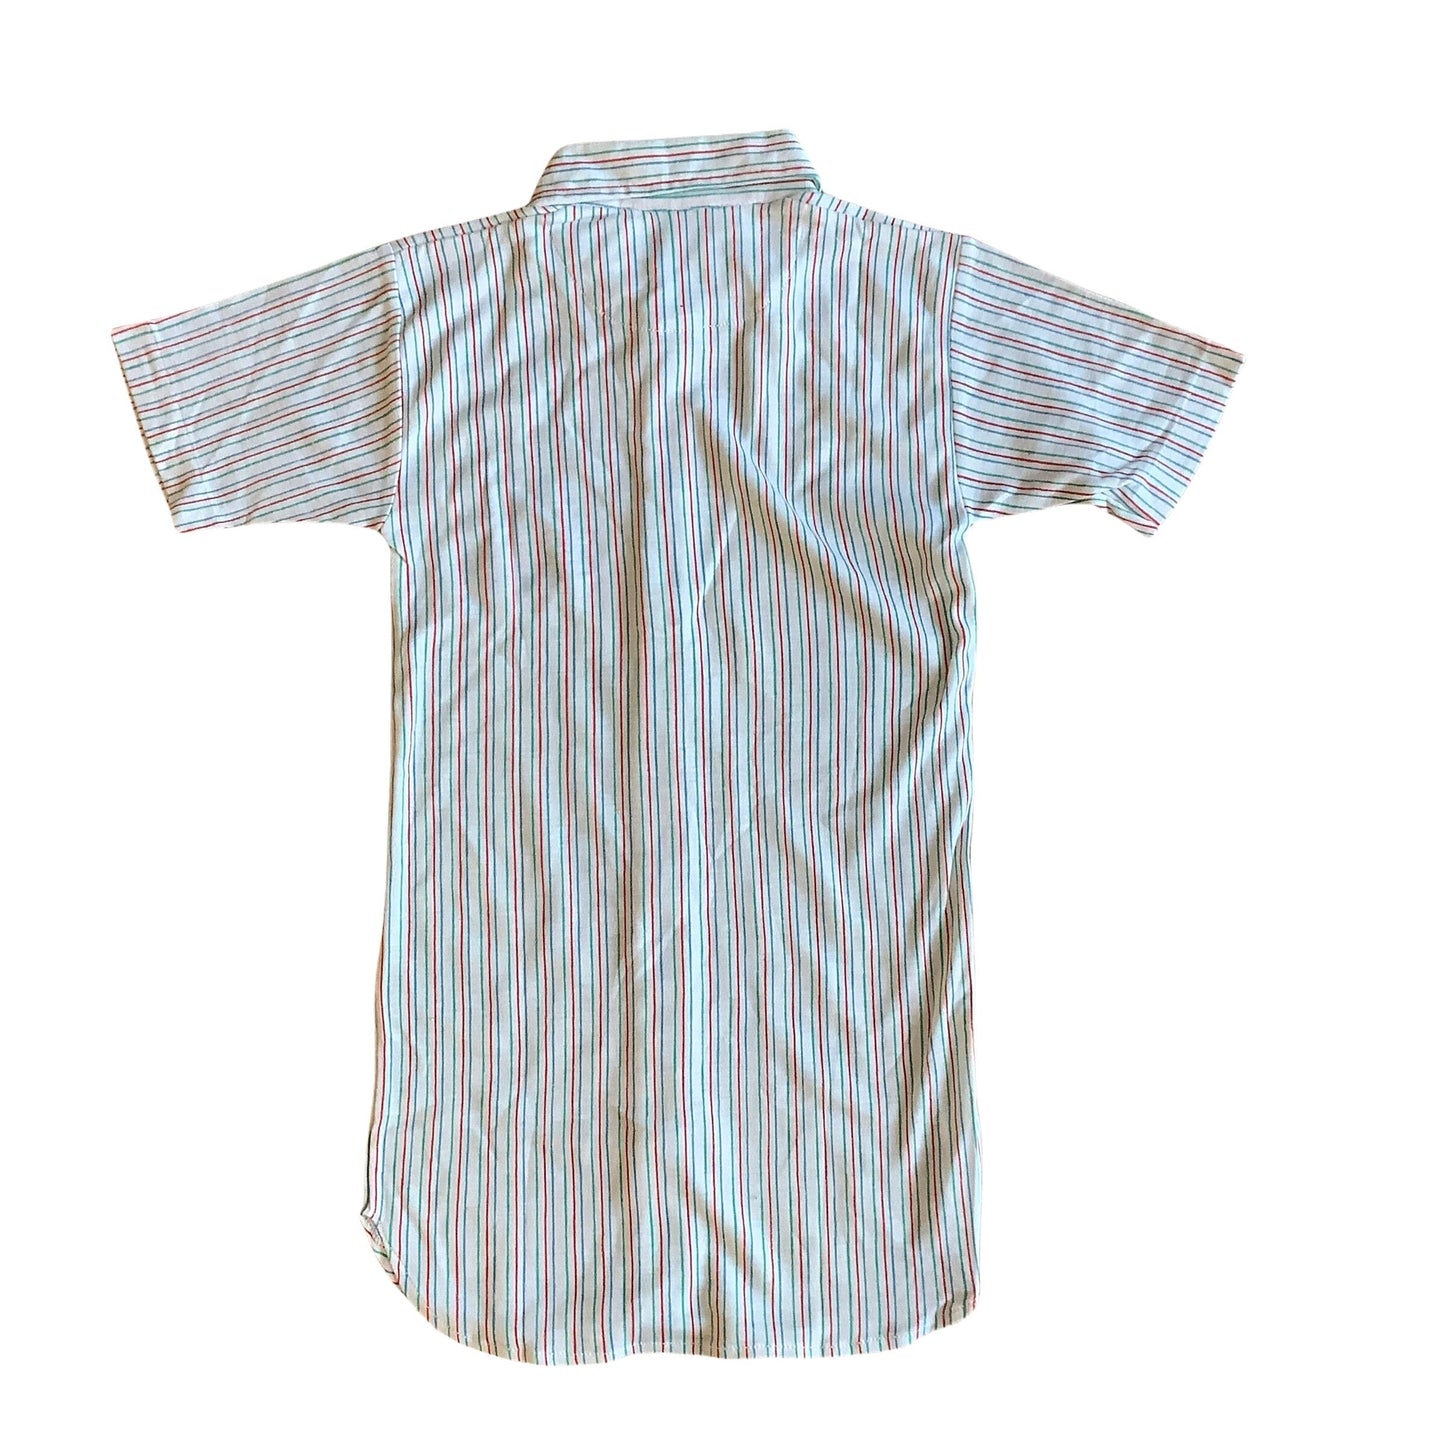 Vintage 1970s Striped Top / Shirt  10-12Y